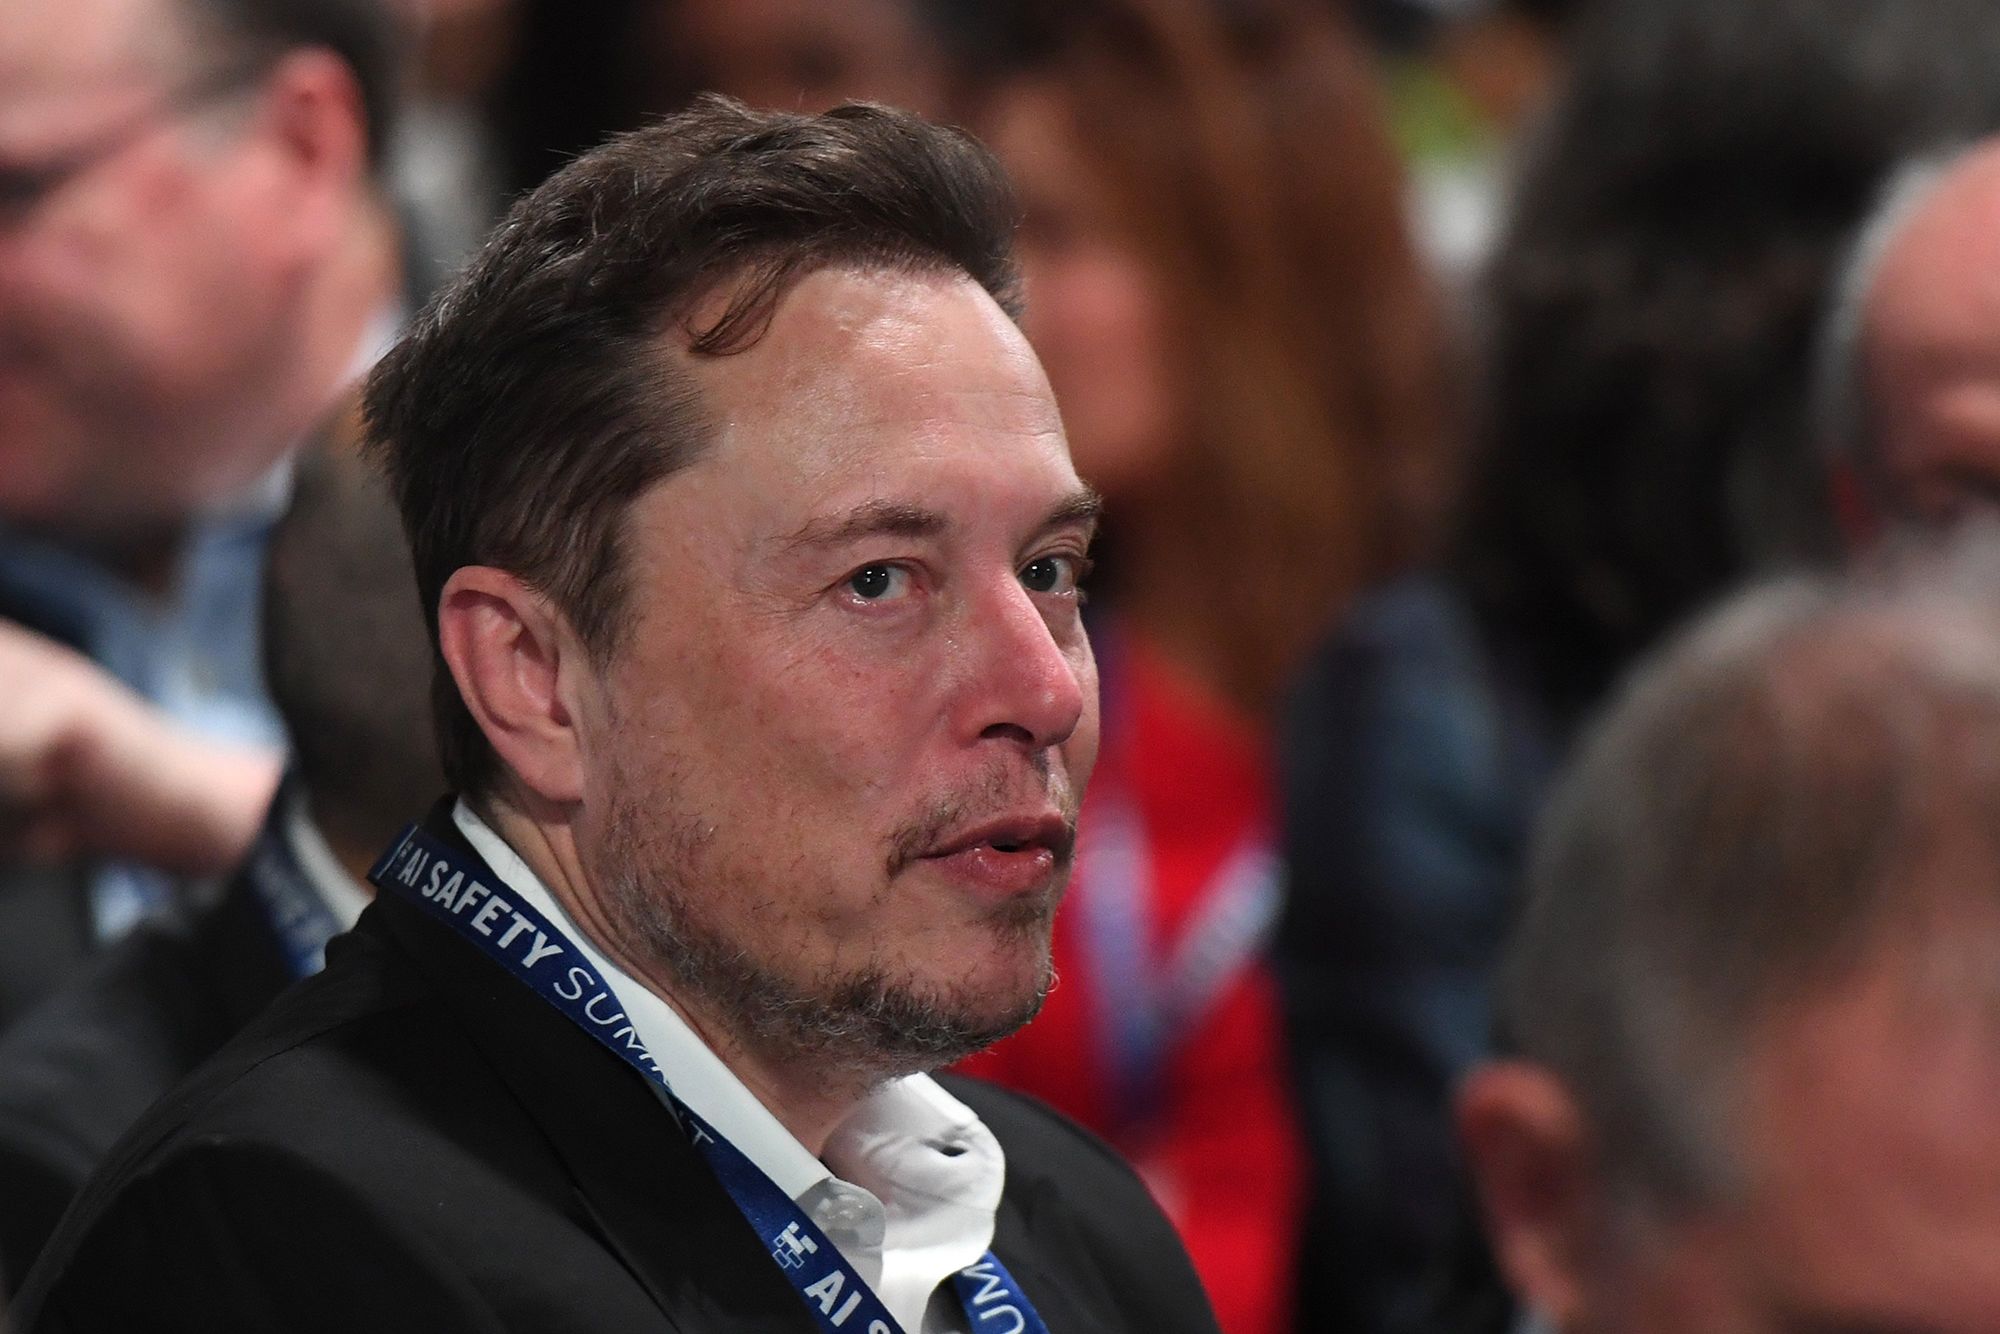 Rachel Goldberg, Mother Of Israeli Hostage, Believes In Elon Musk’s Sincere Visit